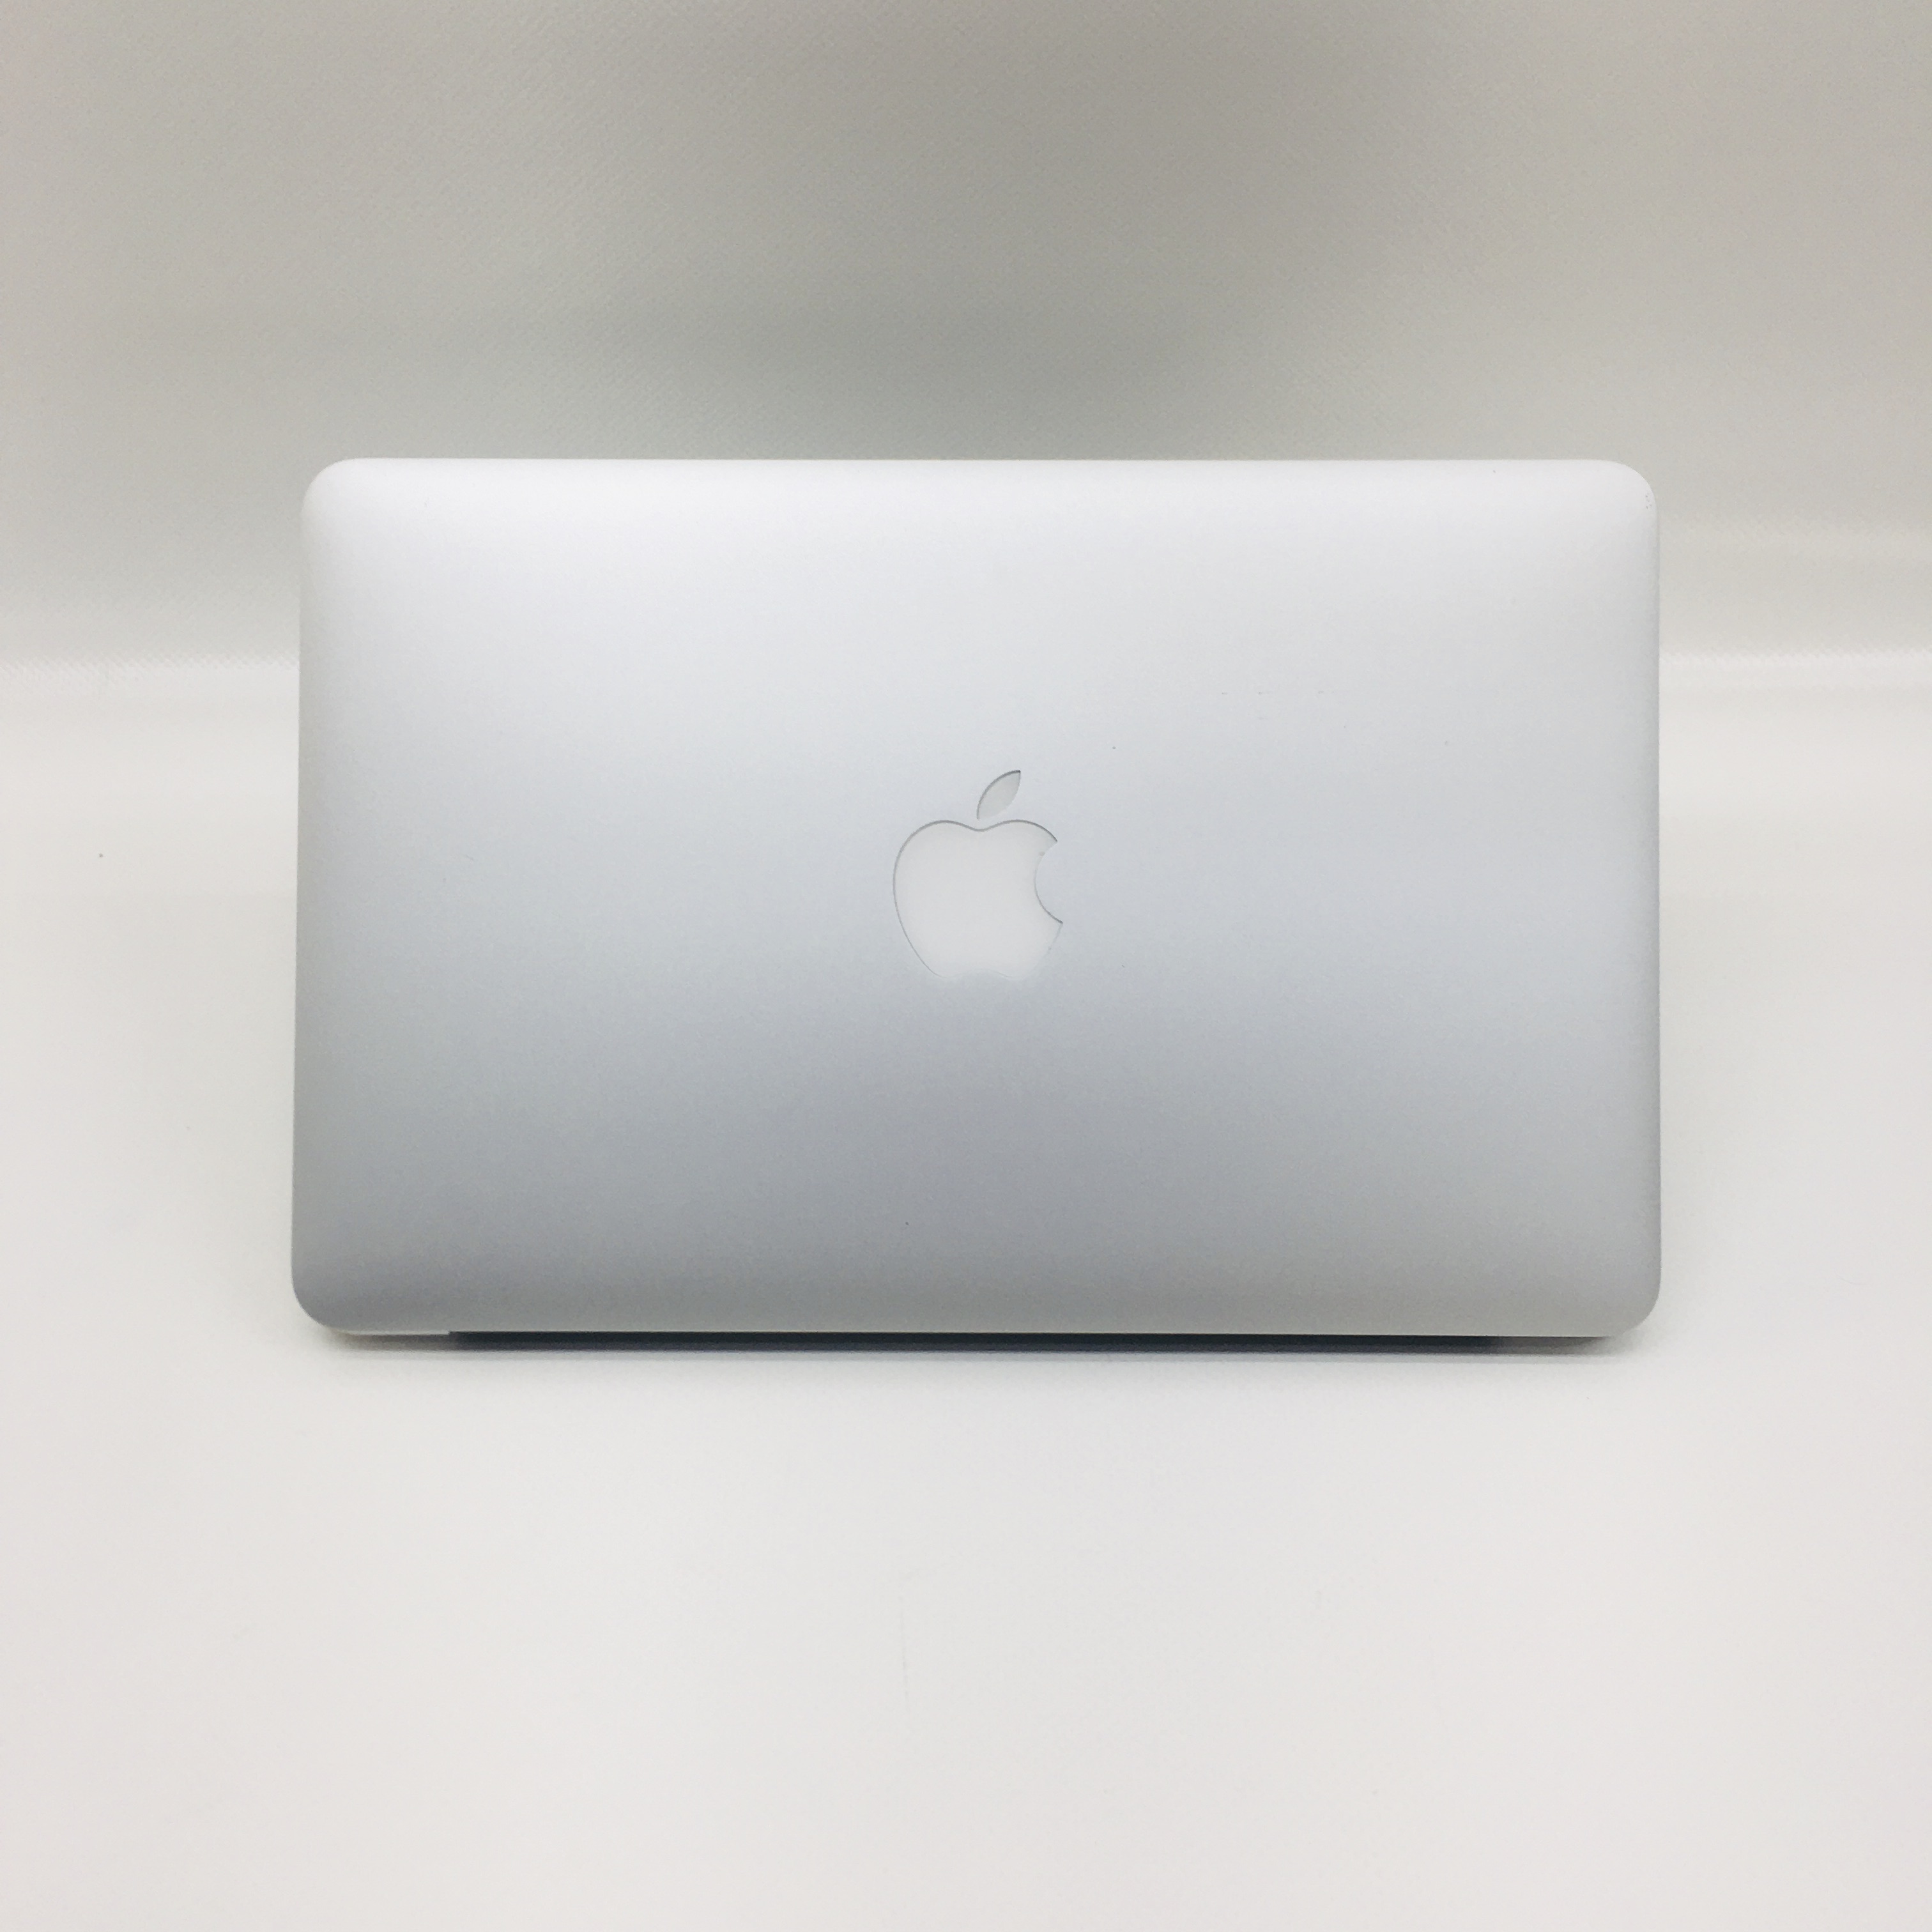 MacBook Air 11" Early 2015 (Intel Core i5 1.6 GHz 4 GB RAM 512 GB SSD), Intel Core i5 1.6 GHz, 4 GB RAM, 512 GB SSD, image 2